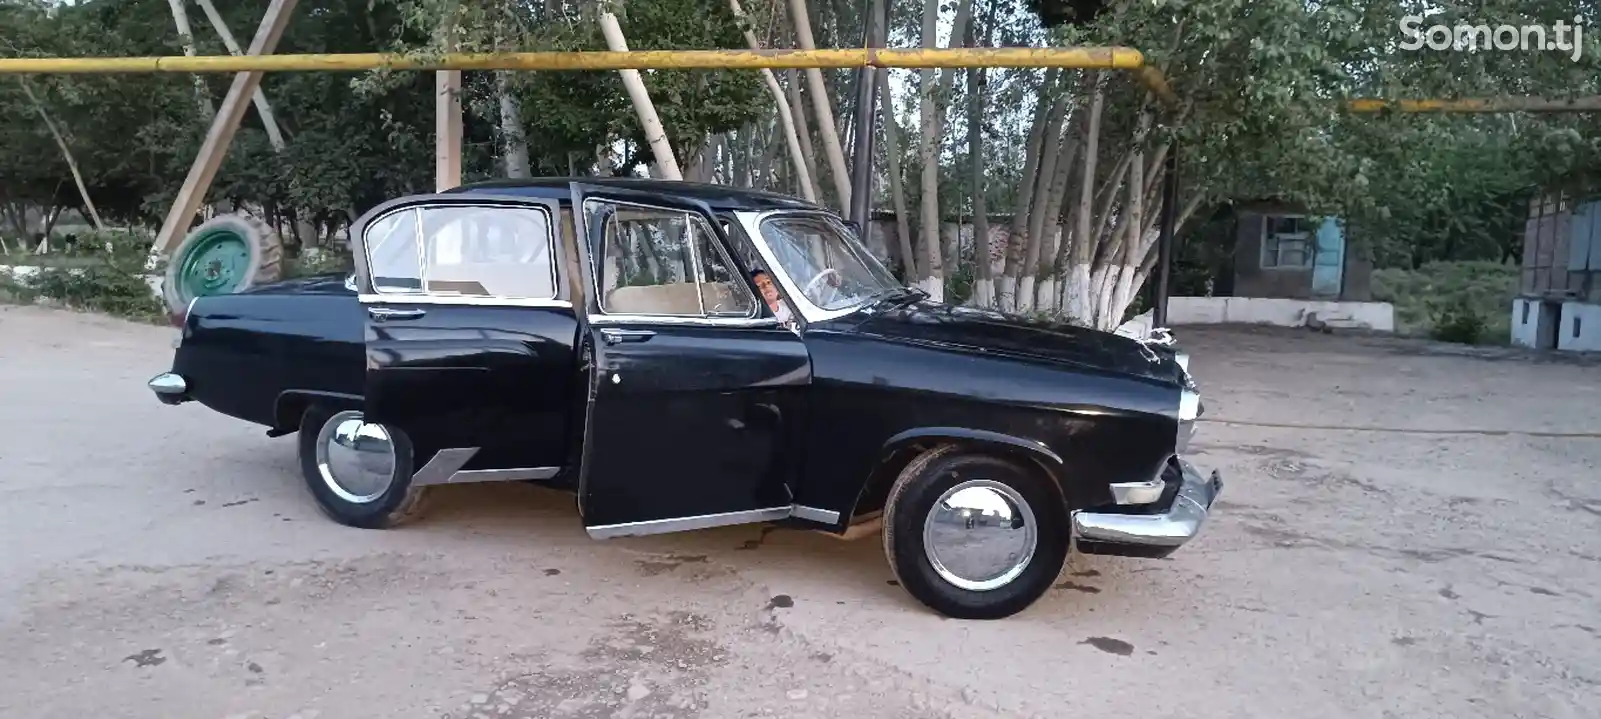 ГАЗ 21, 1963-11